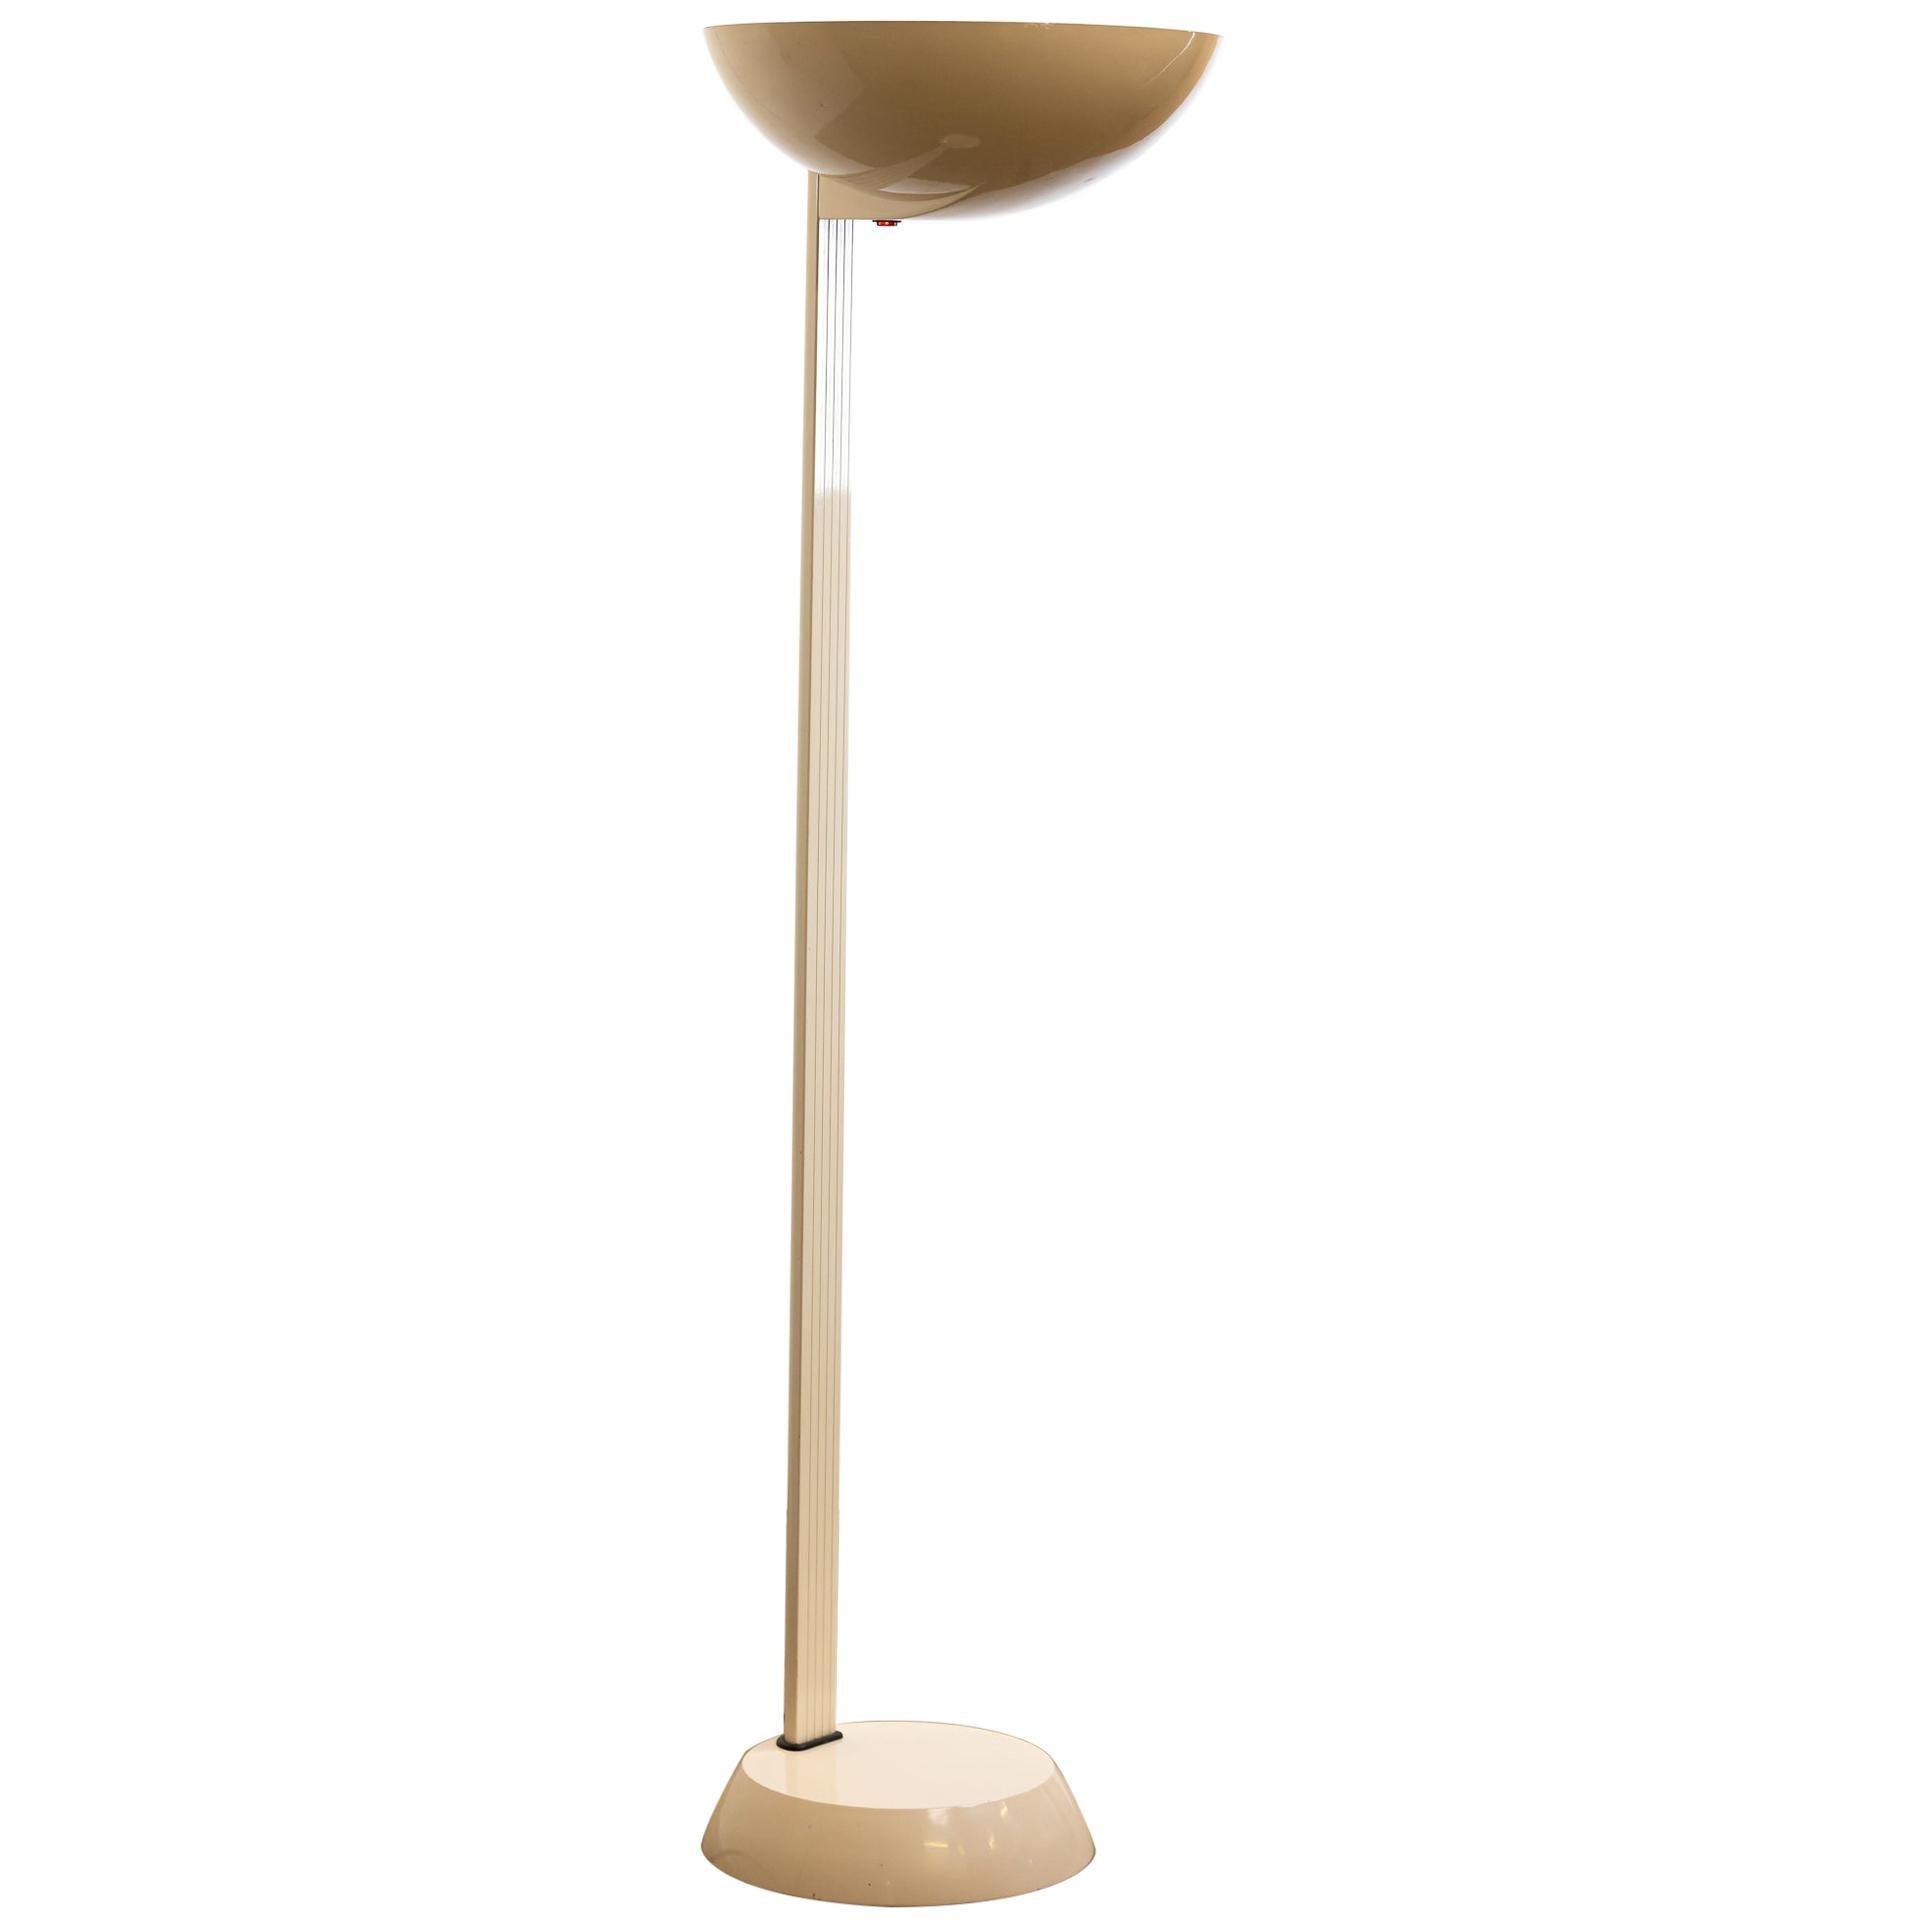 Mid-20th Century Modern Cream Floor Standing Uplighter, Floor Lamp For Sale